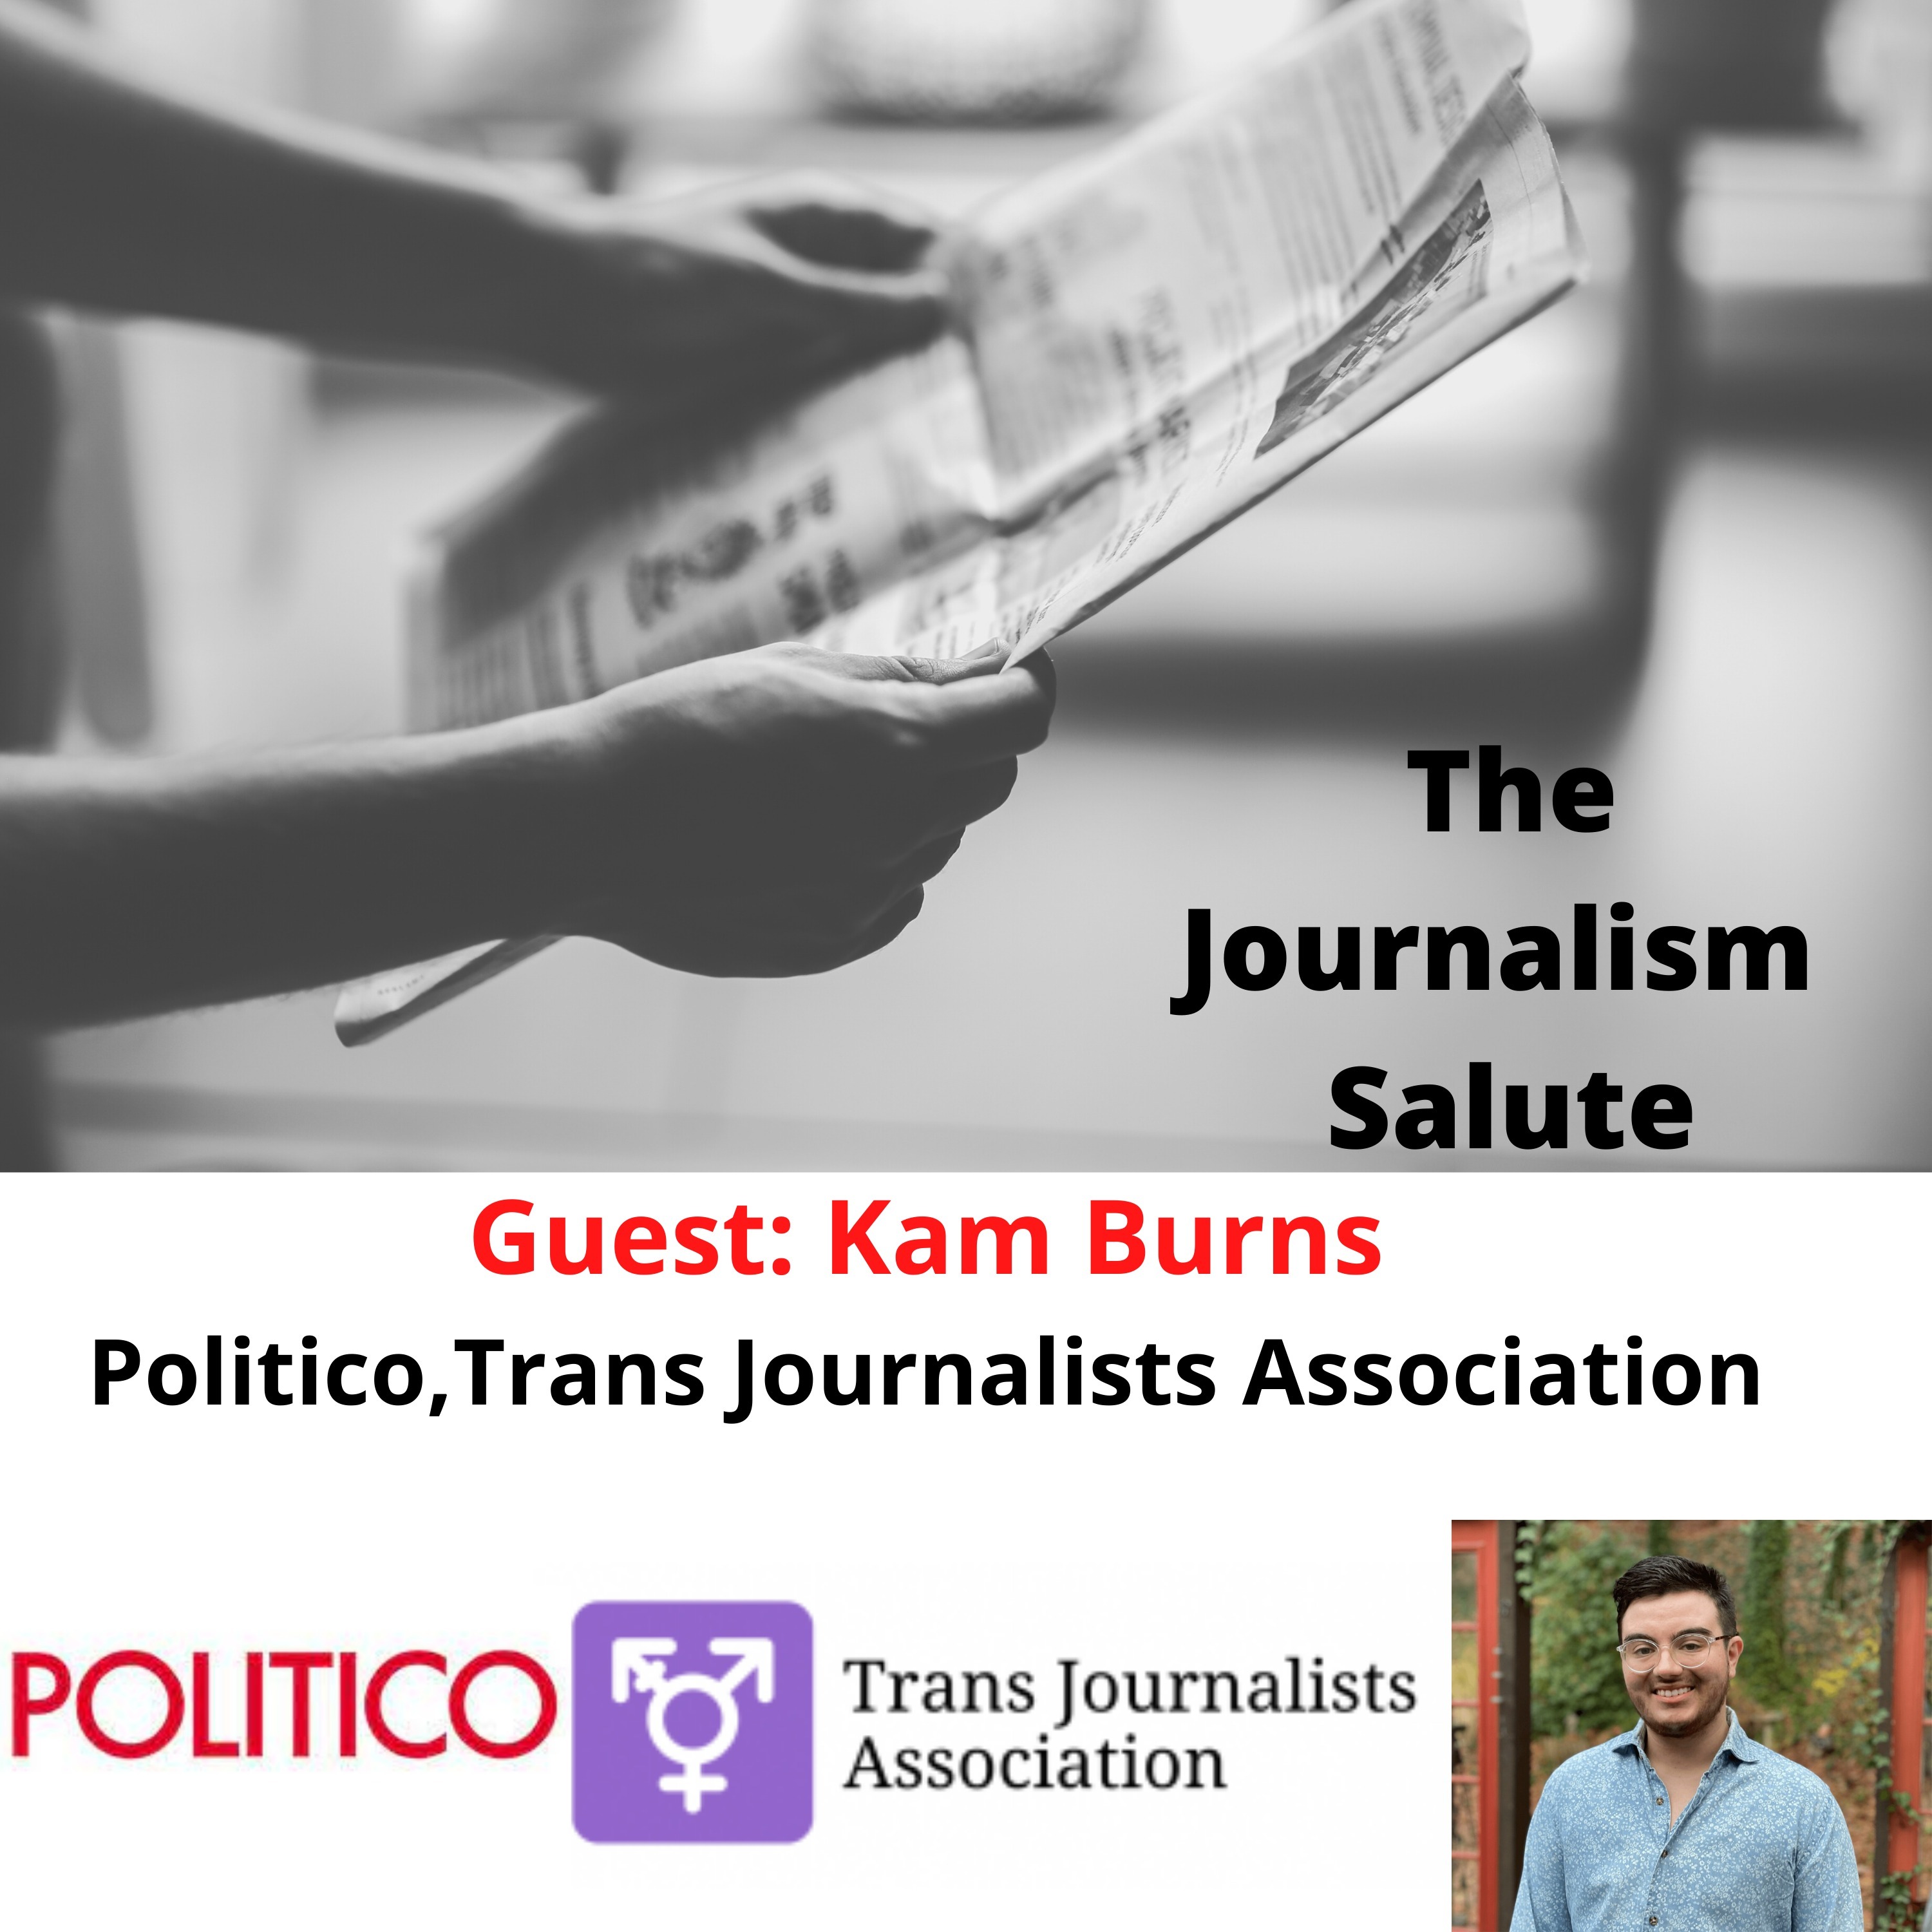 Kam Burns: Engagement Editor, Politico; Founding Member - Trans Journalists Association